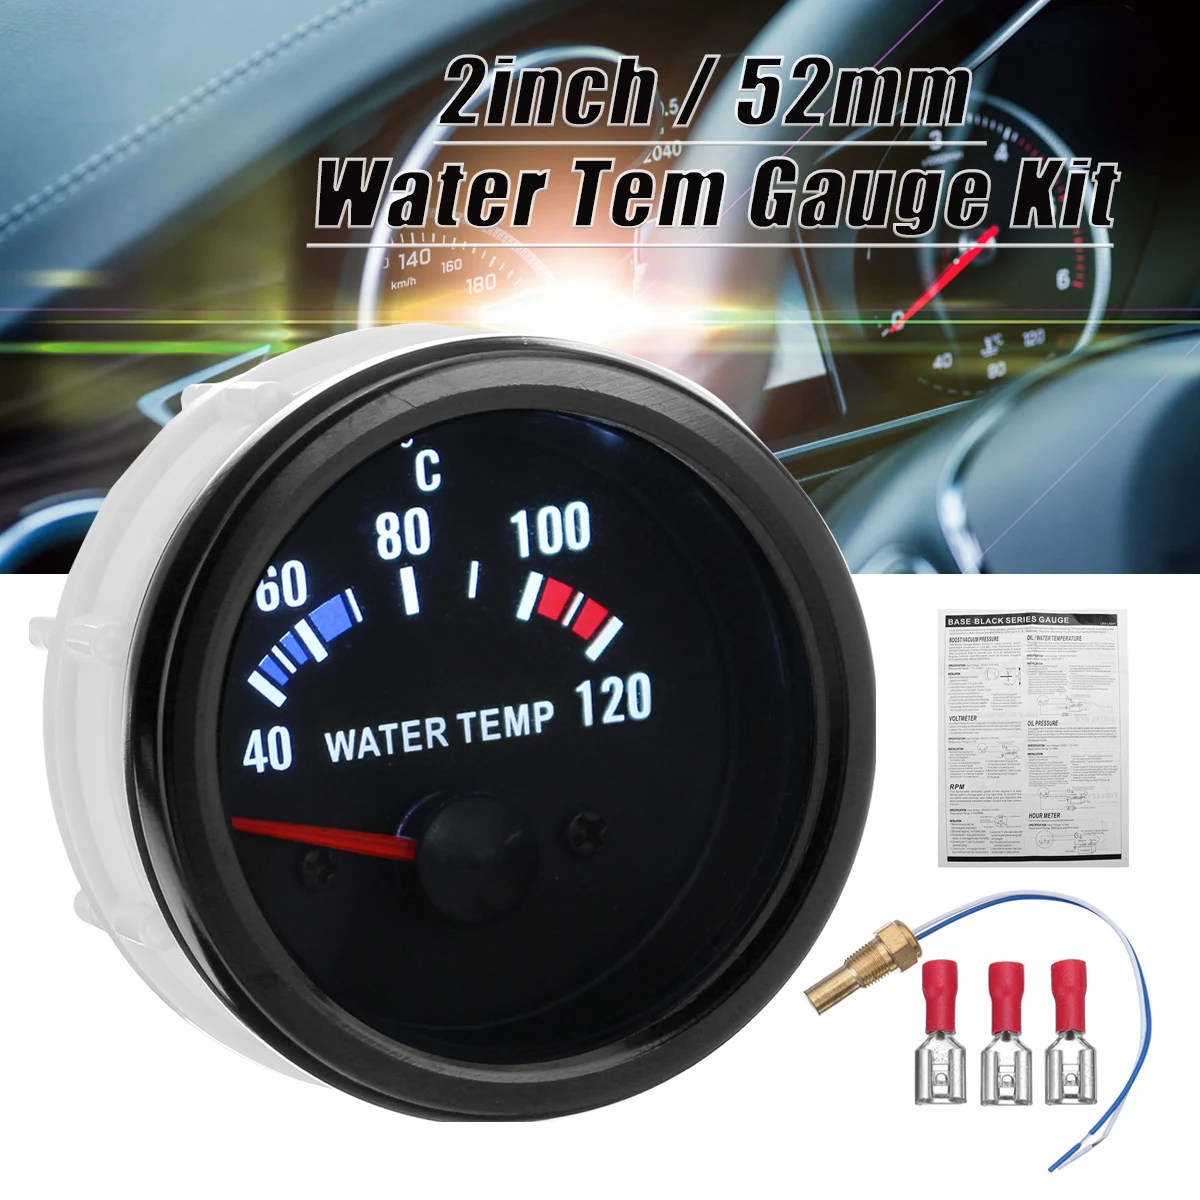 MOTOR METER RACING 2 Water Temperature Gauge F Dual LED Backlit White Amber Waterproof Pin-Style Install Includes Sensor 